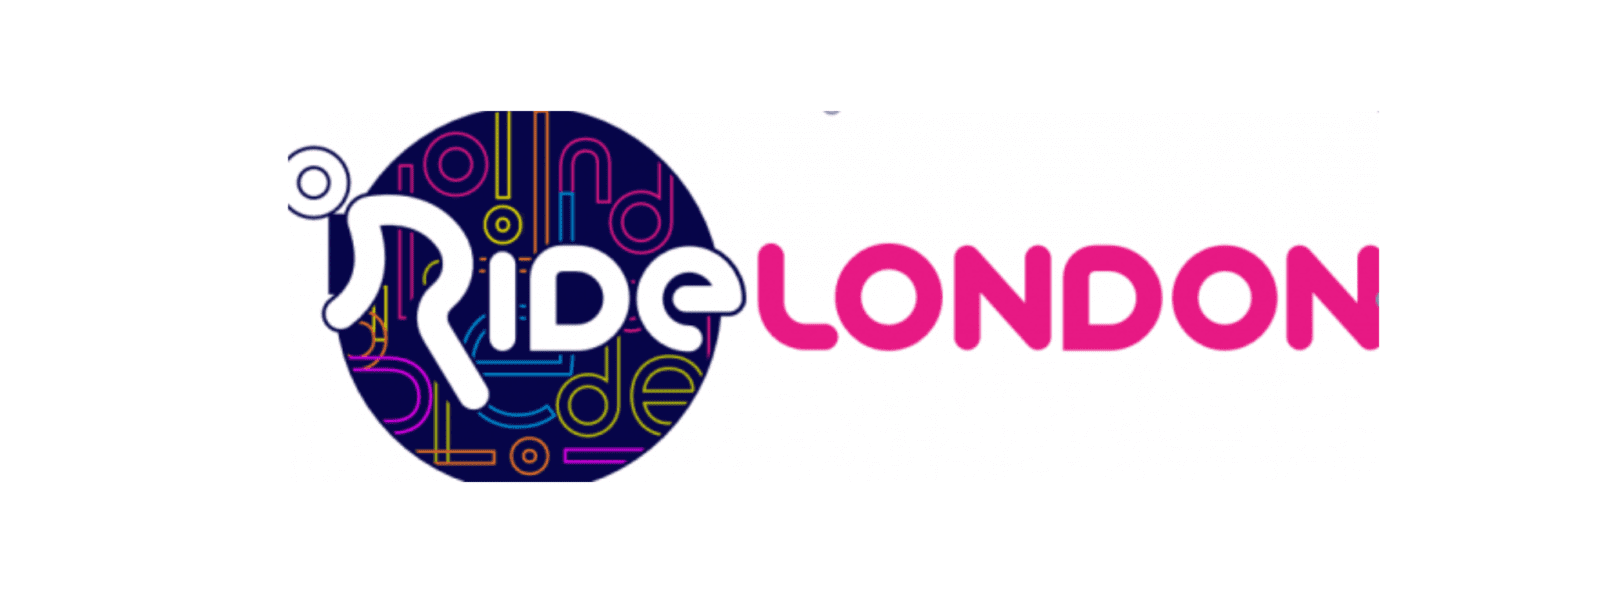 Ride London logo